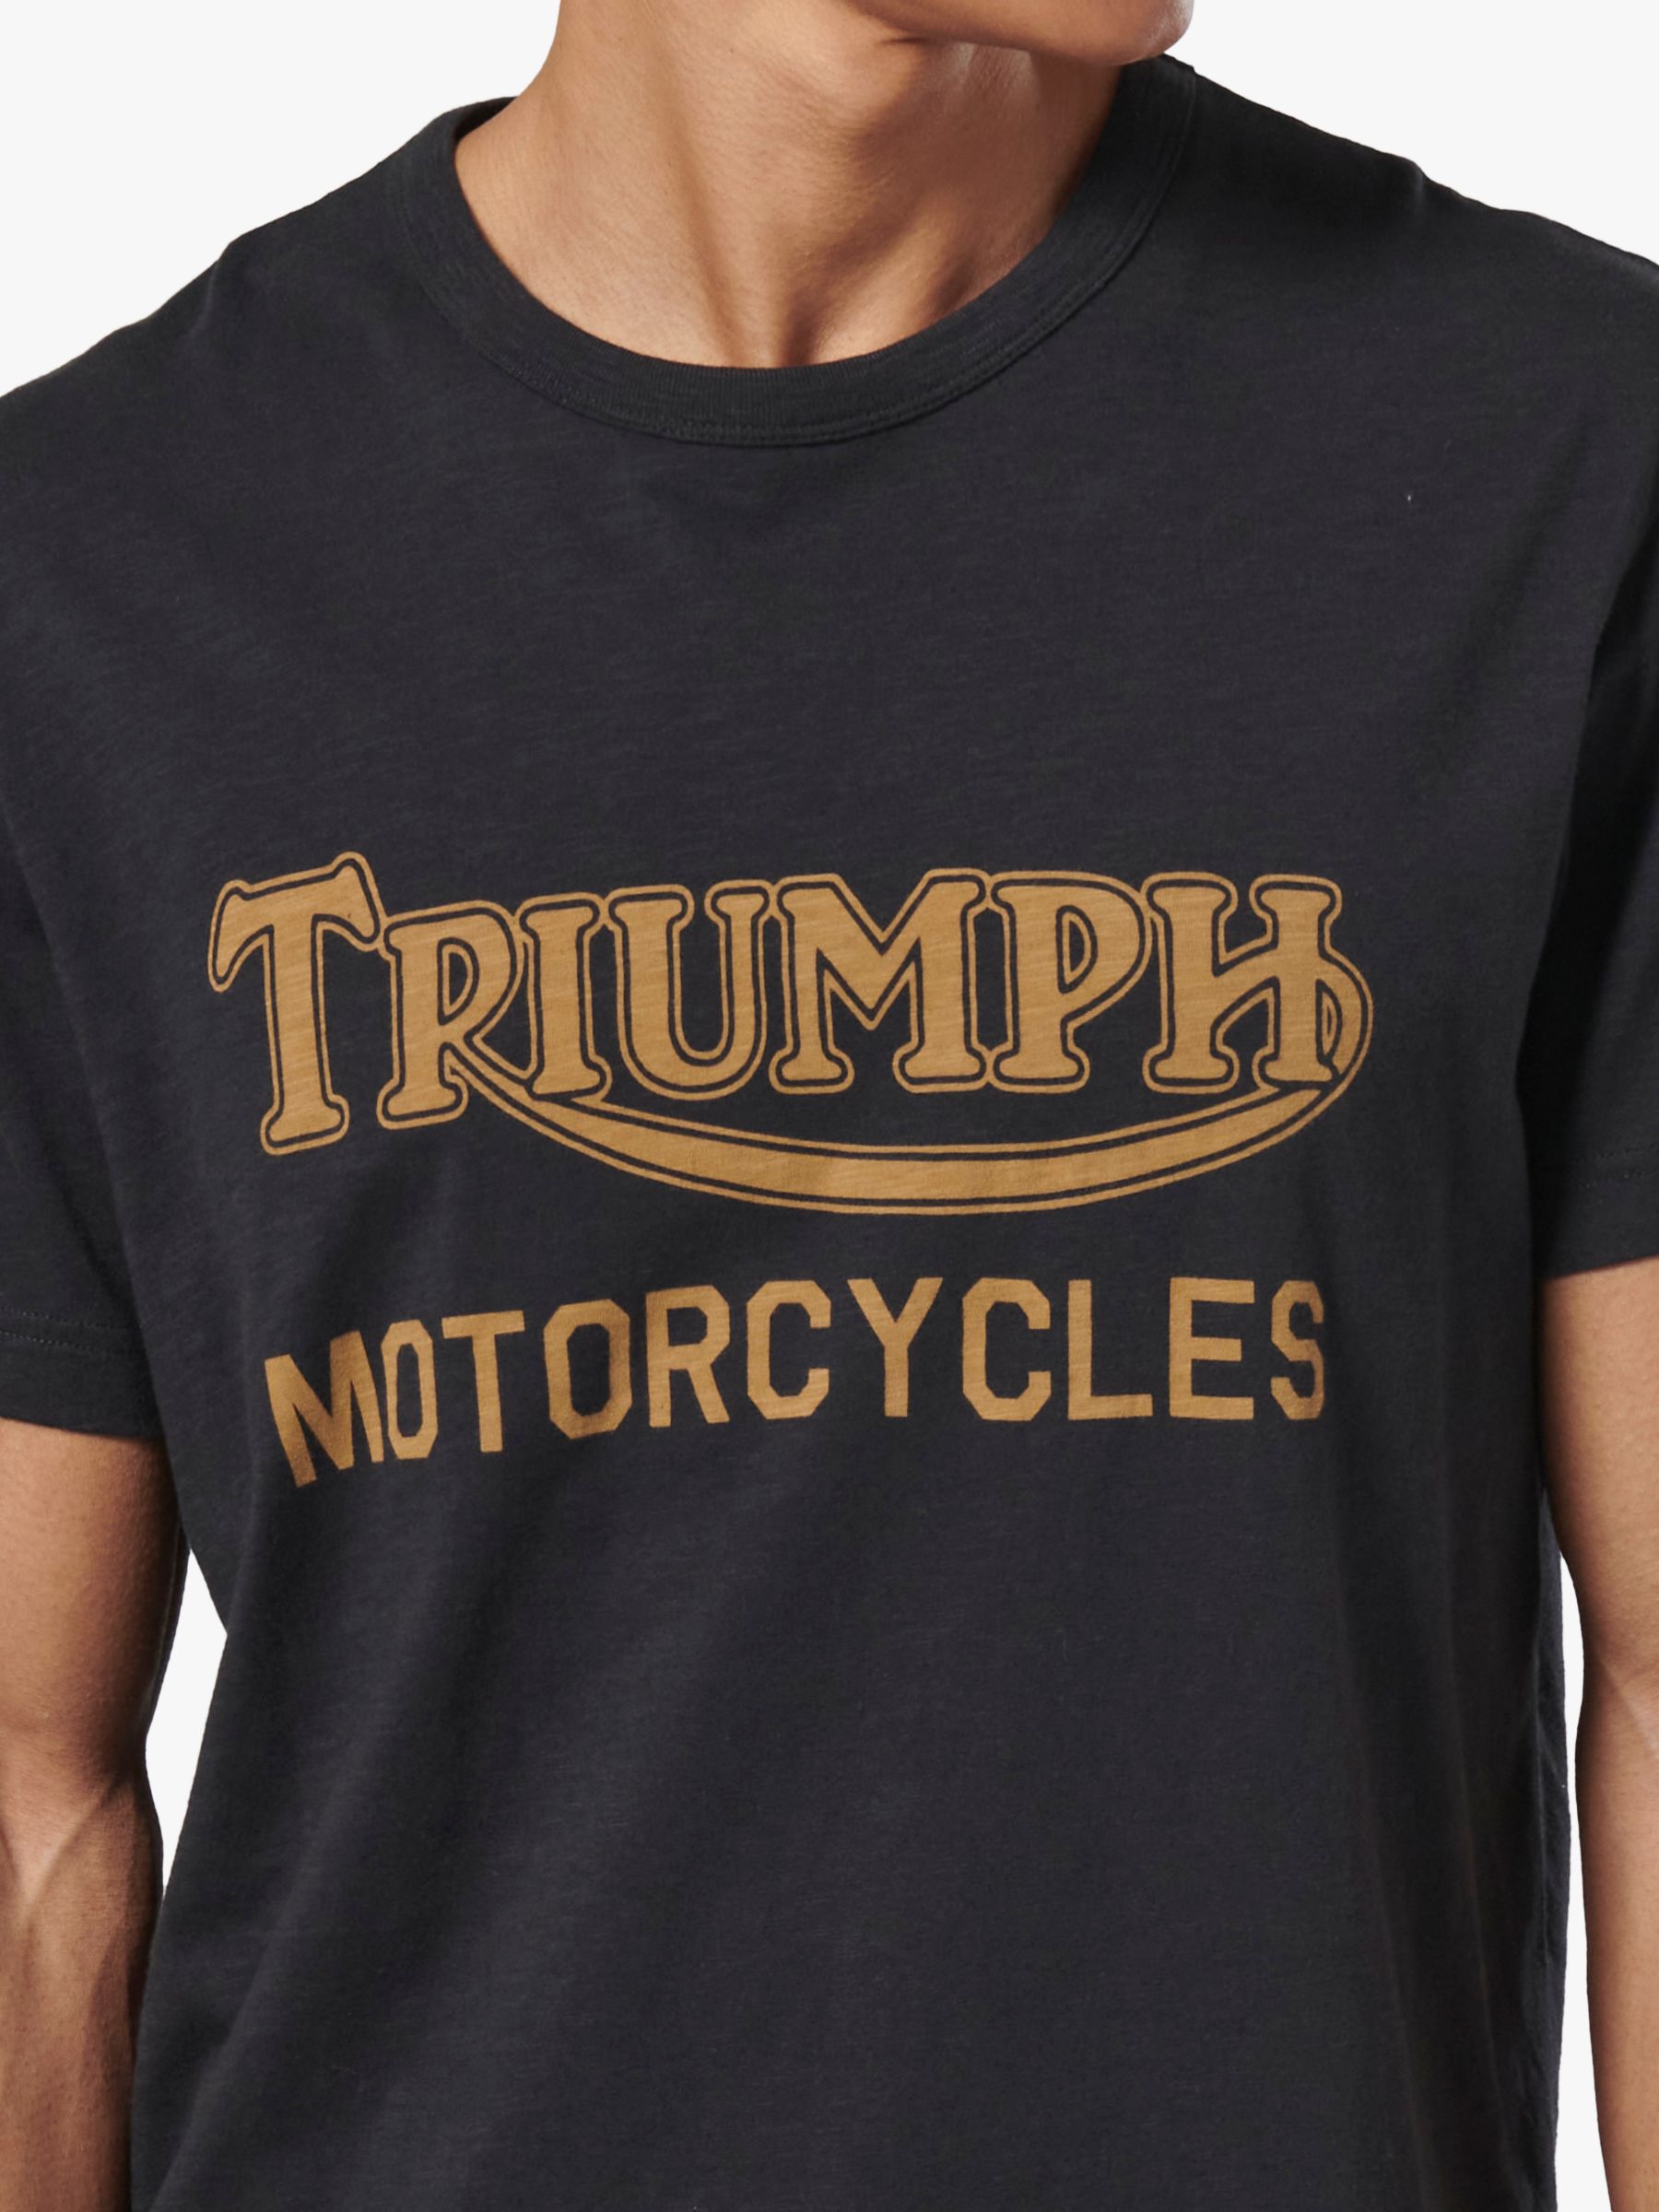 Triumph Motorcycles Barwell T-Shirt, Black, S